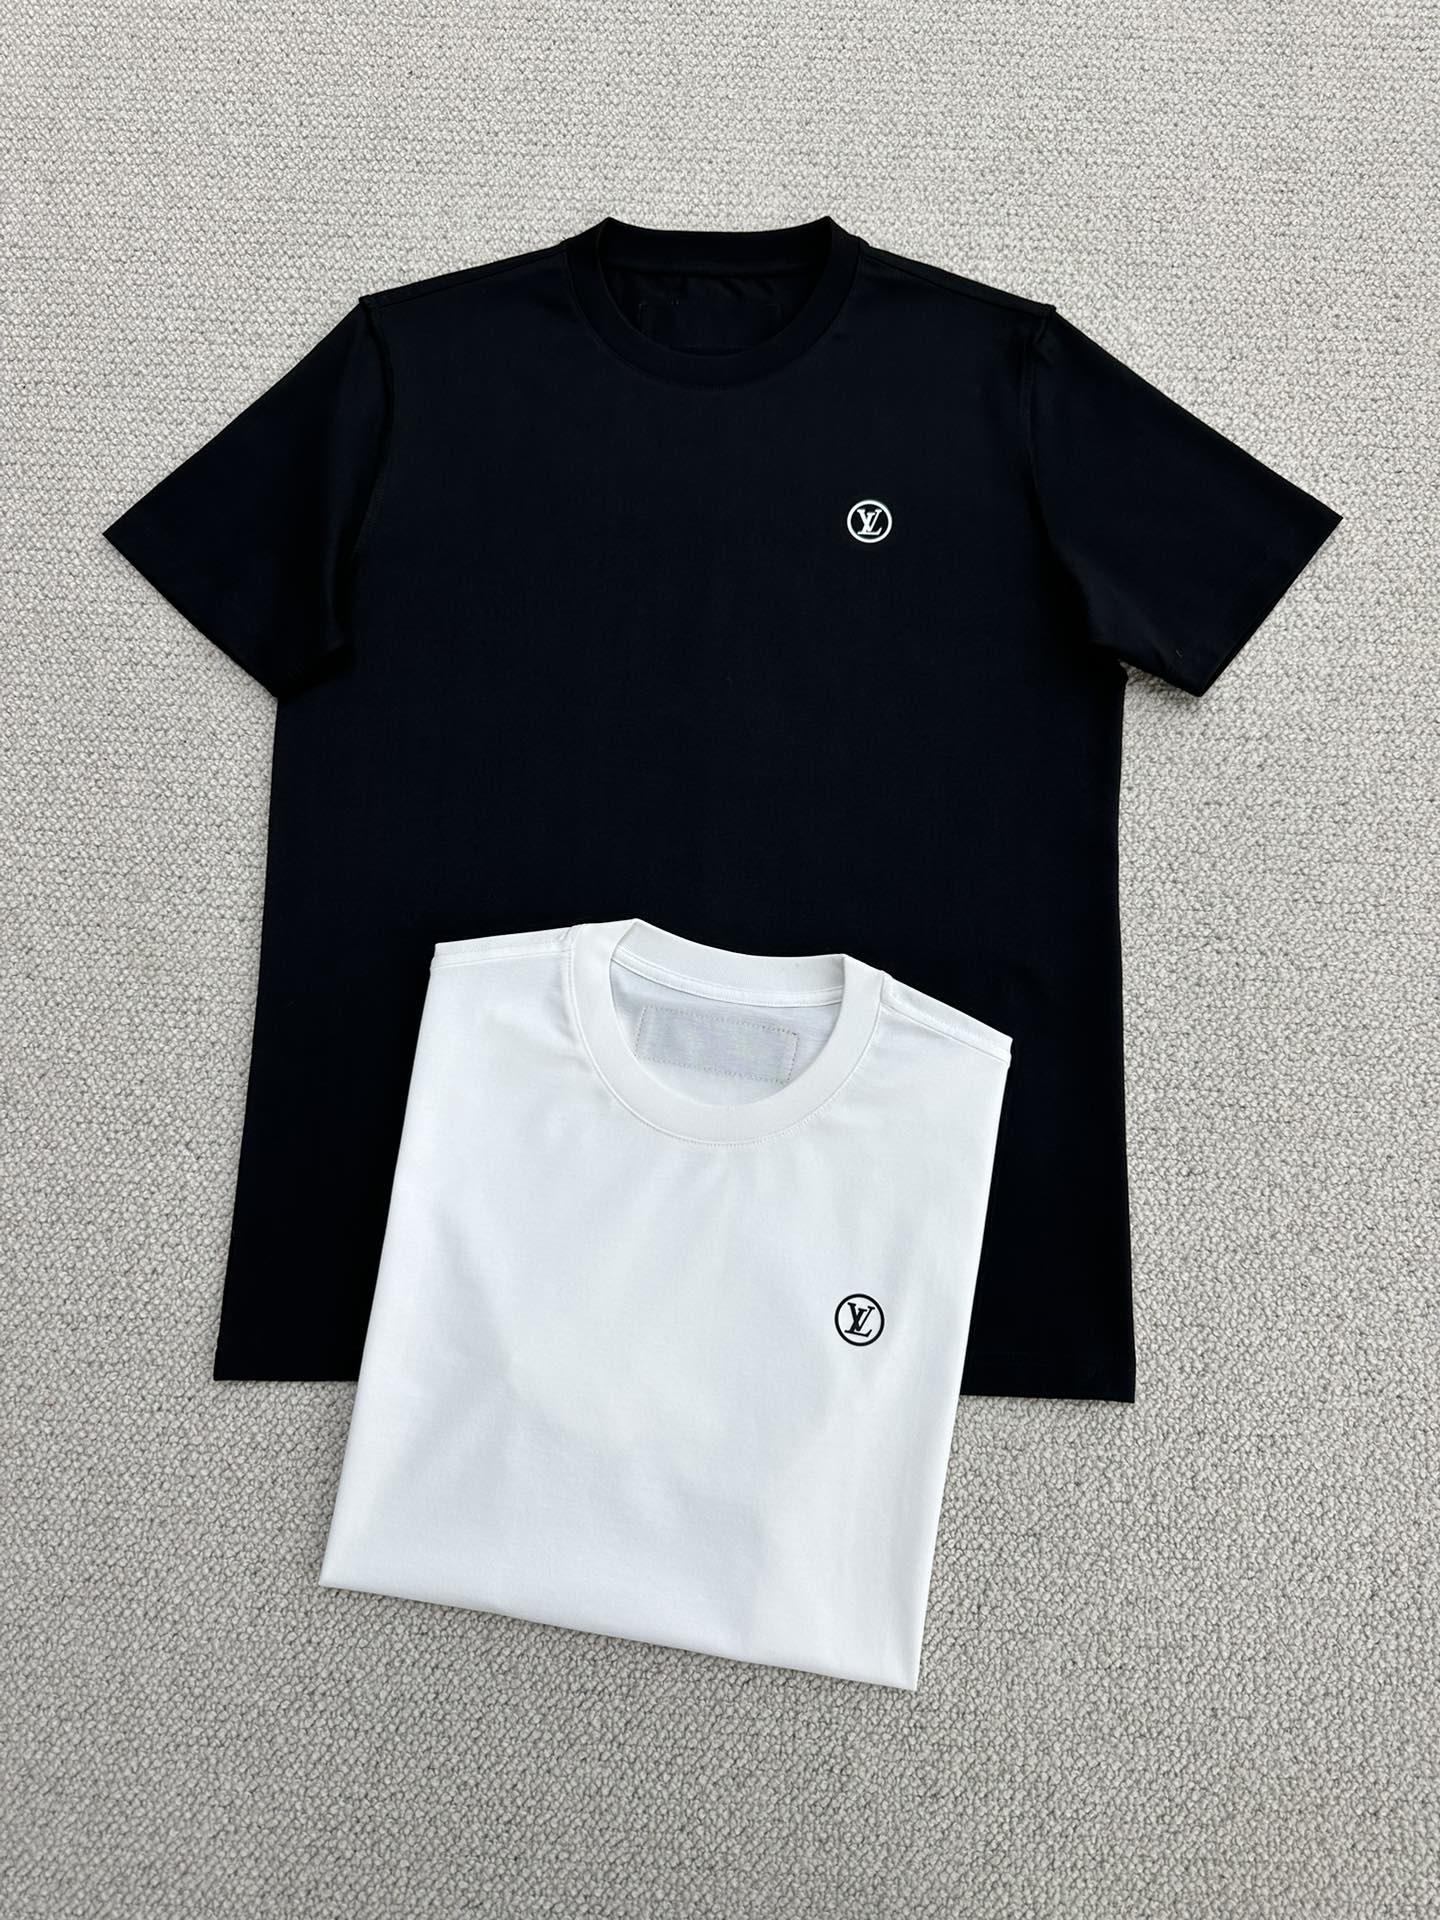 Louis Vuitton Clothing T-Shirt Black White Cotton Silica Gel